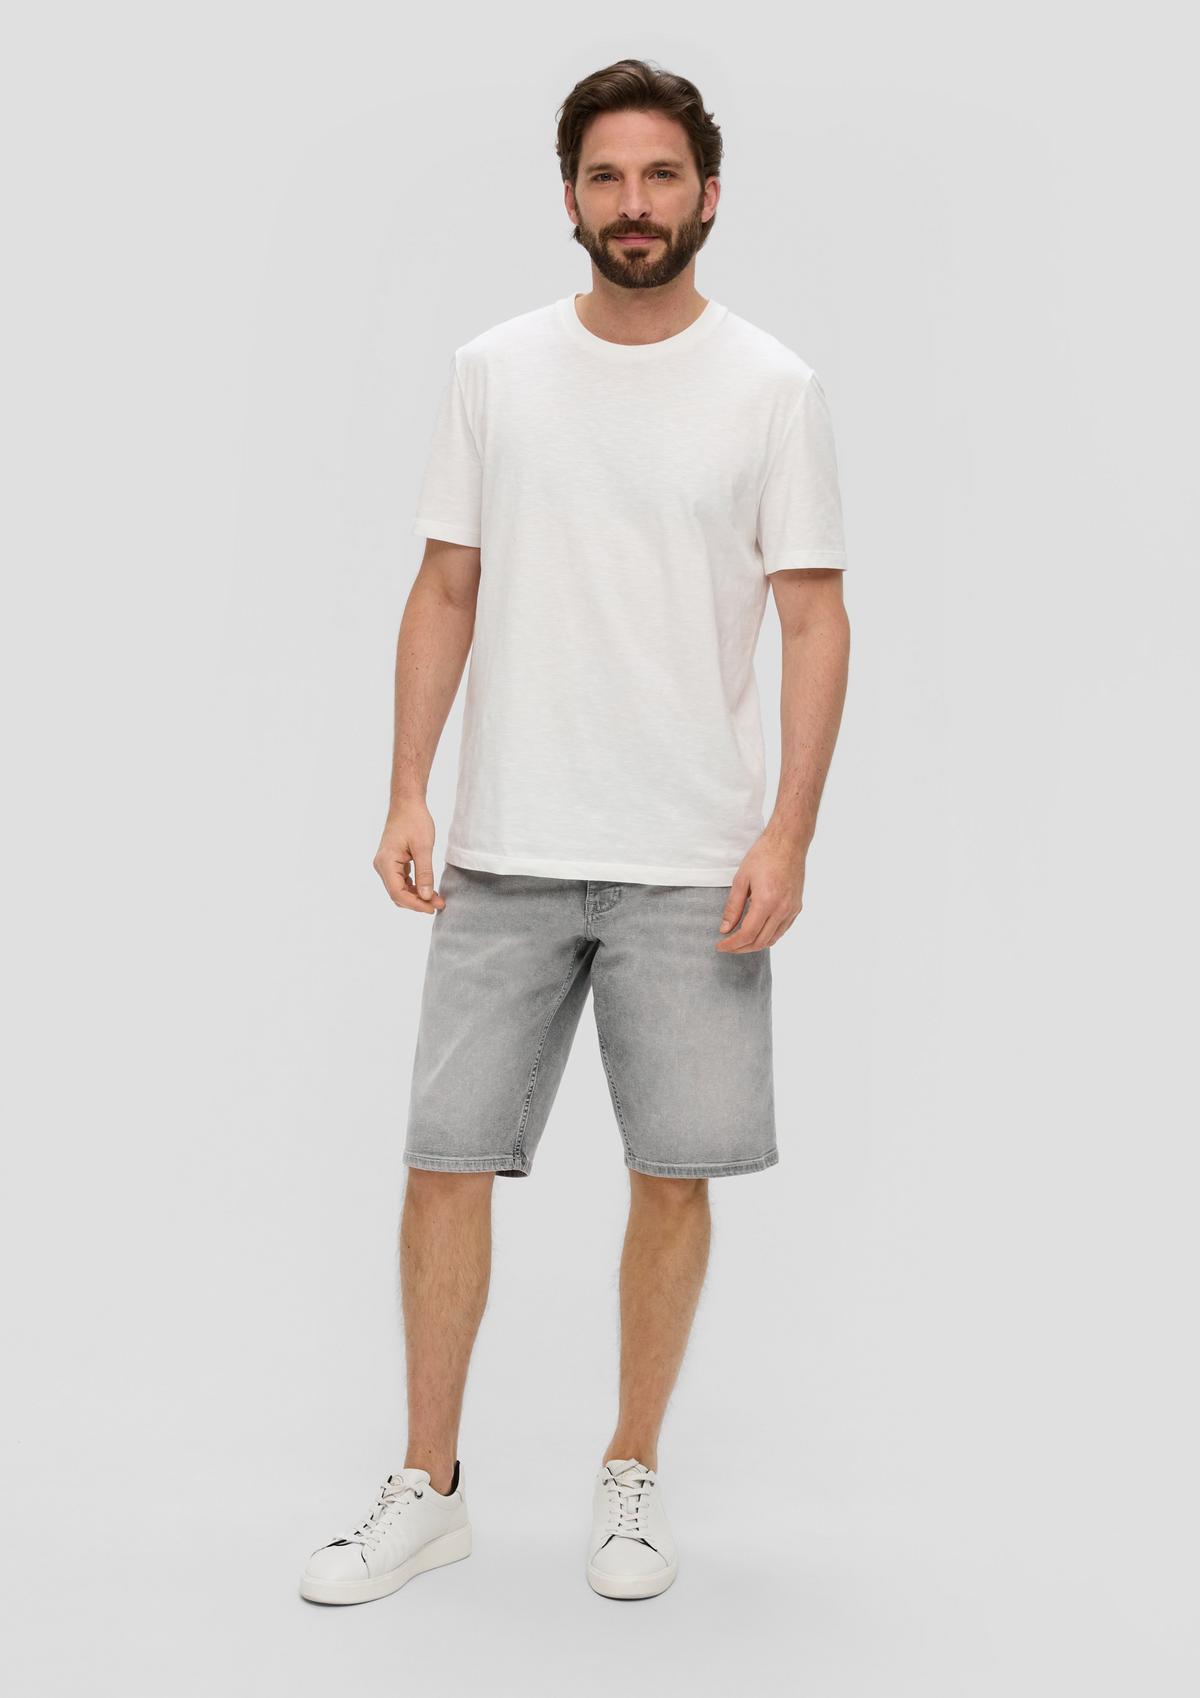 Denim shorts / regular fit / mid rise / slim leg